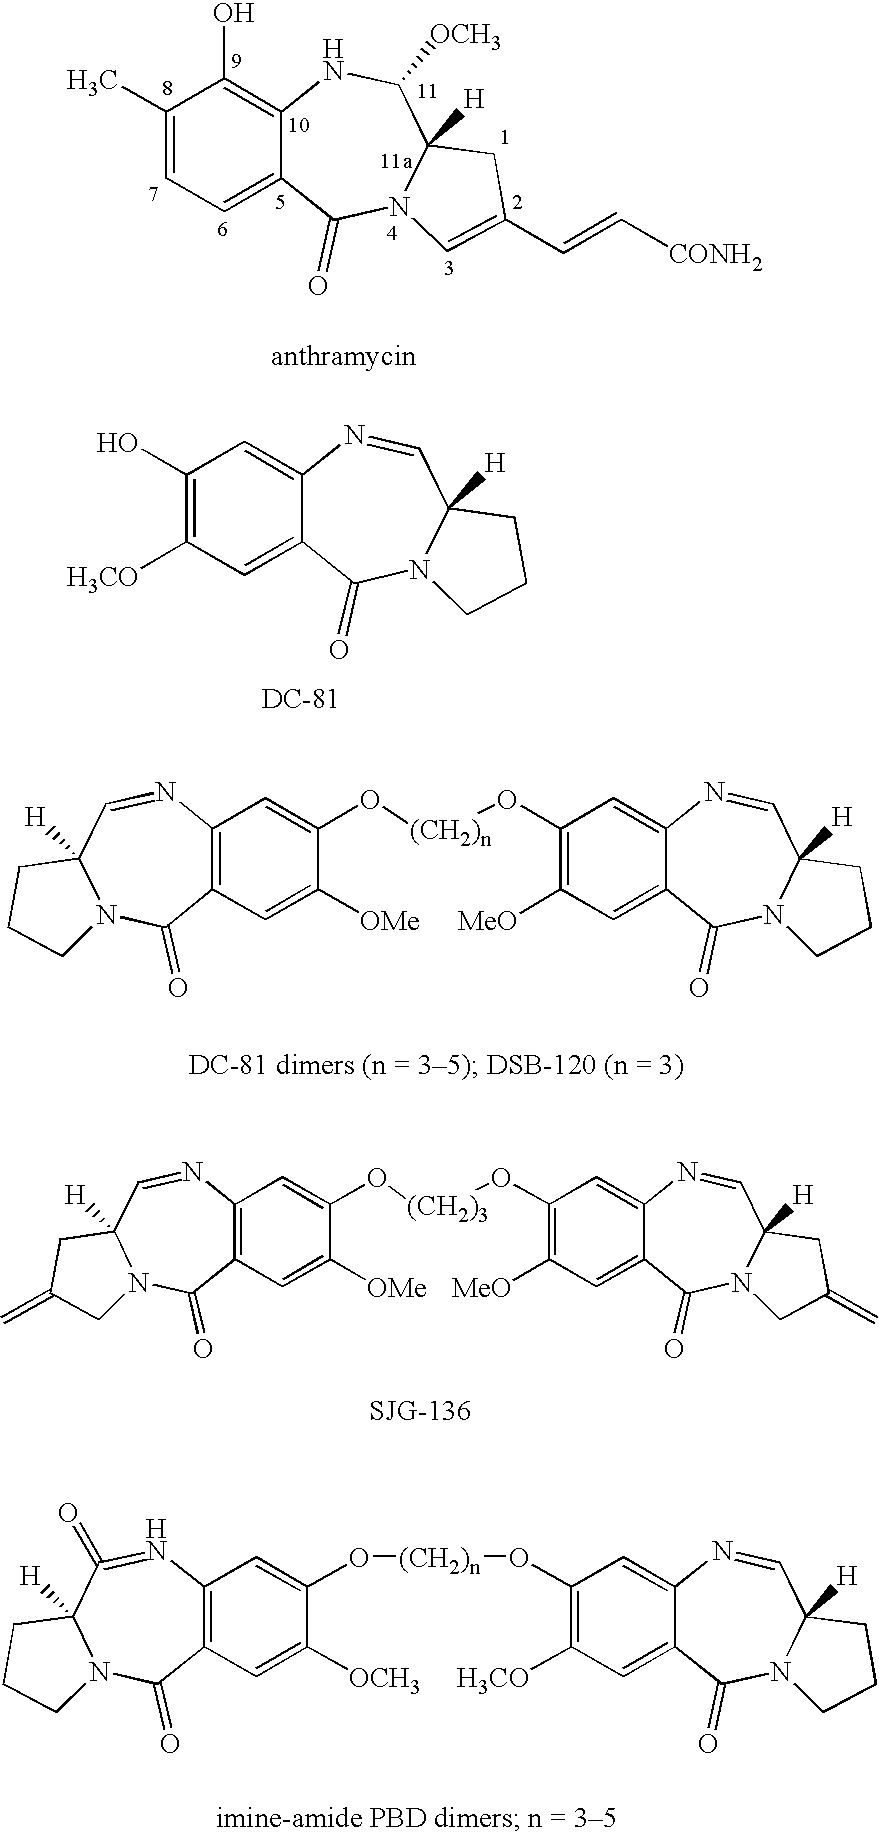 C8 - linked pyrrolo[2,1-c][1,4]benzodiazepine-acridone/acridine hybrids